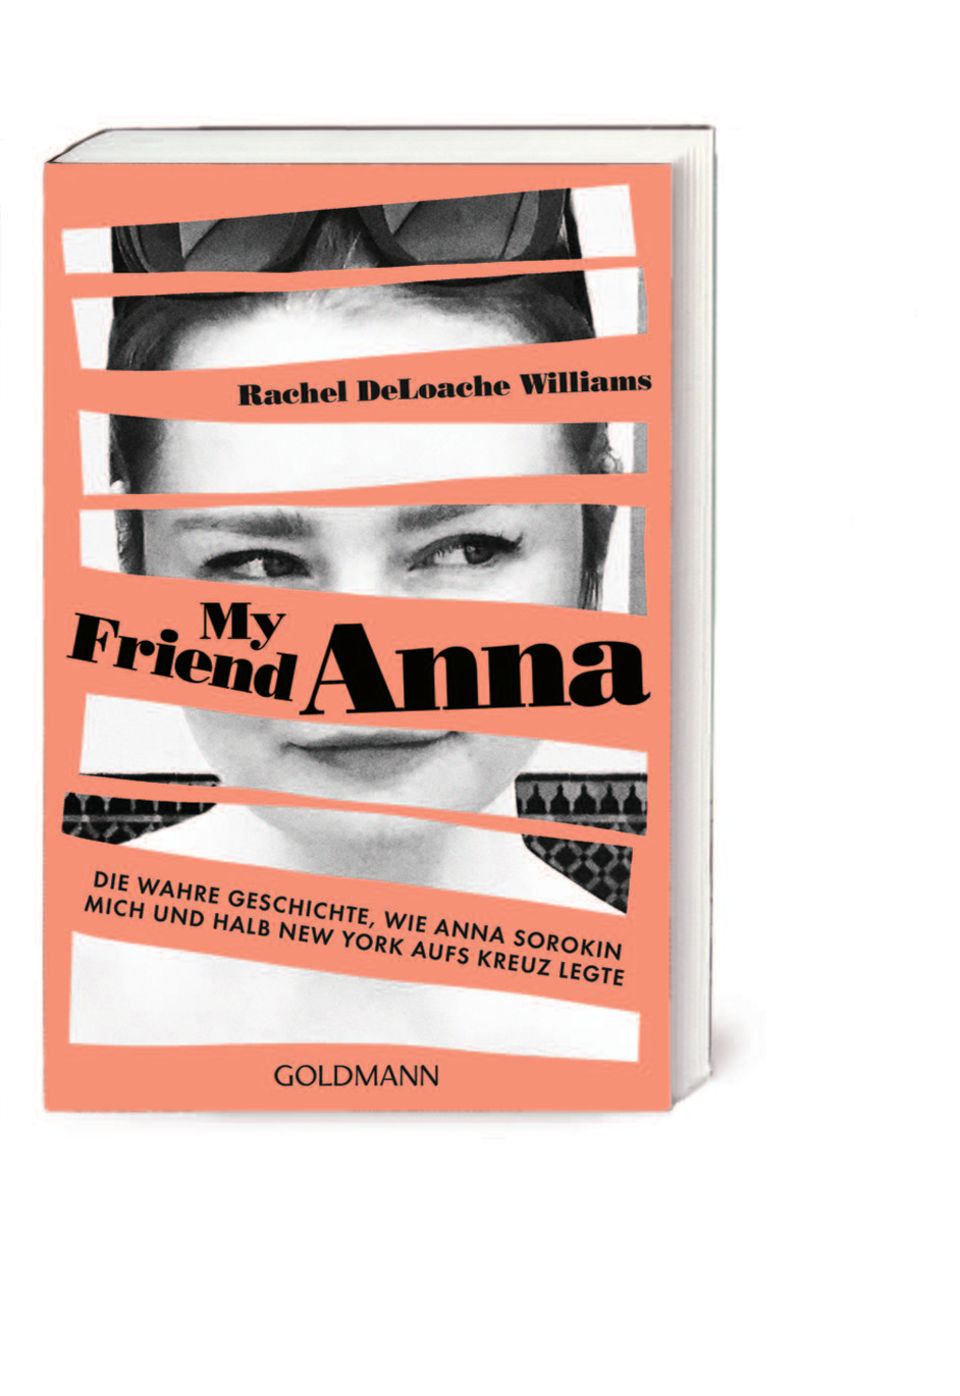 "My Friend Anna": Rachel DeLoache Williams' Buch über Anna Sorokin, Goldmann, 10 Euro